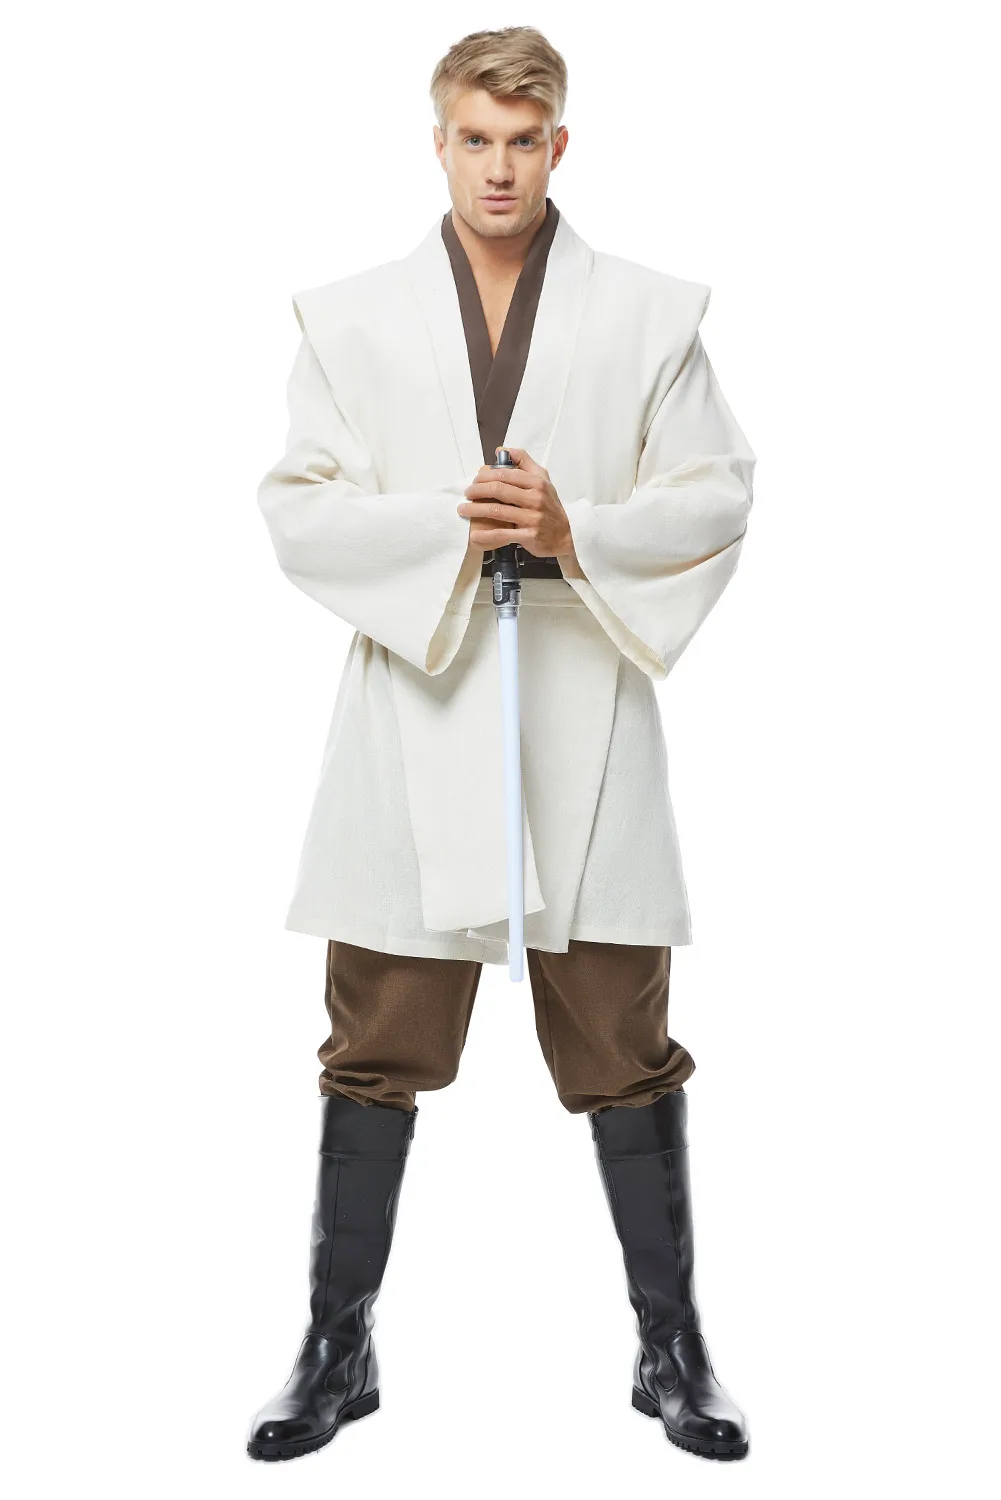 Cosplay&ware Obi Wan Kenobi Costume Jedi Robe Cloak Star Wars -Outlet Maid Outfit Store S6280eb67b06242b89c11a54bbb44fb909.jpg